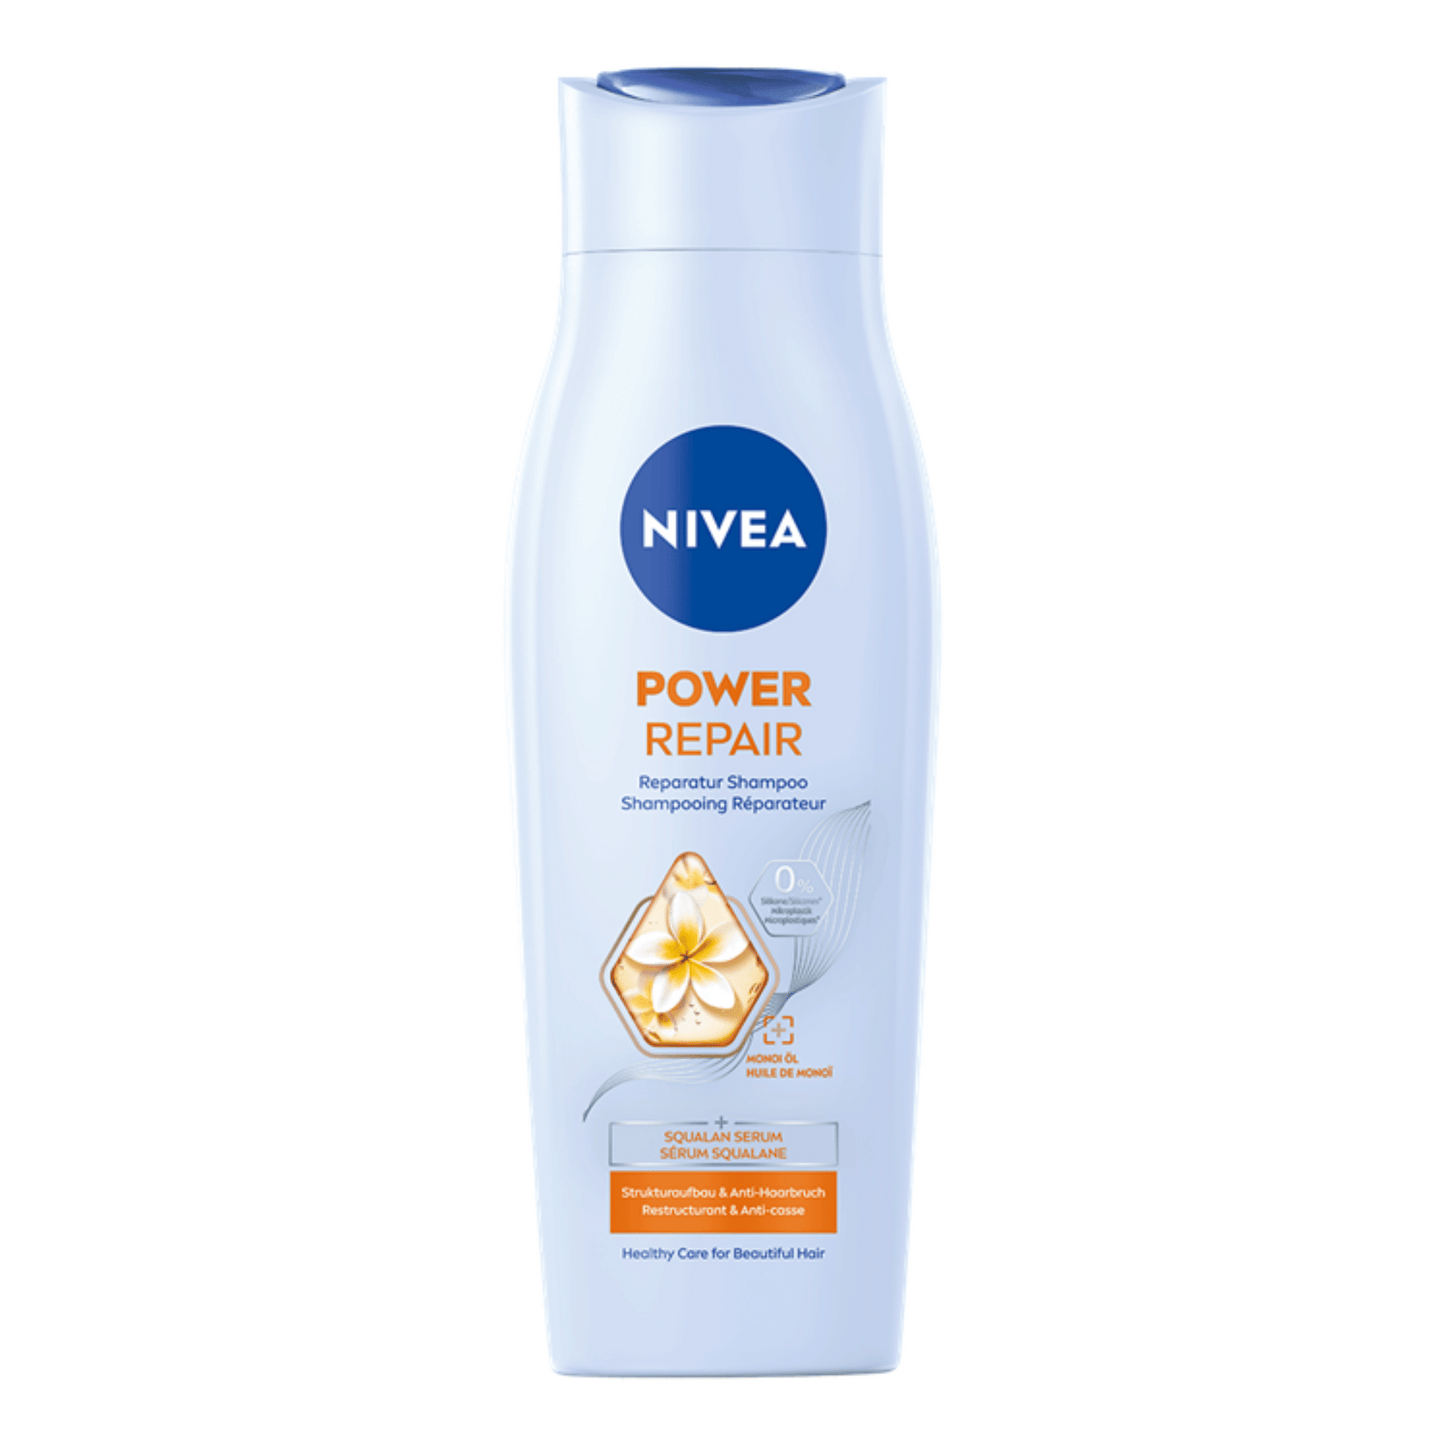 Primary Image of Power Repair Shampoo